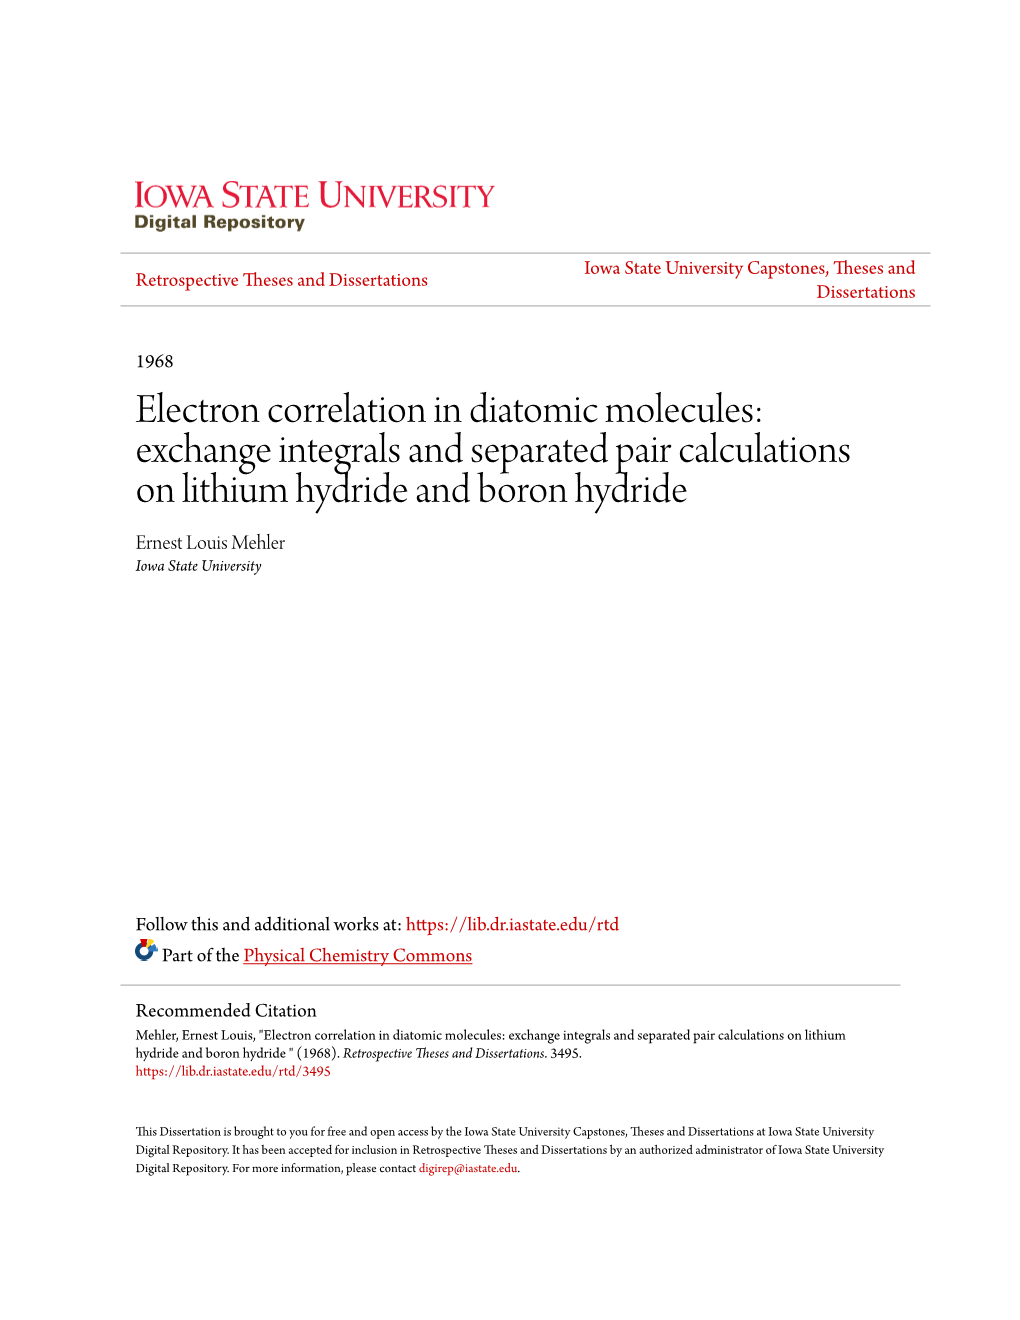 Electron Correlation in Diatomic Molecules: Exchange Integrals And